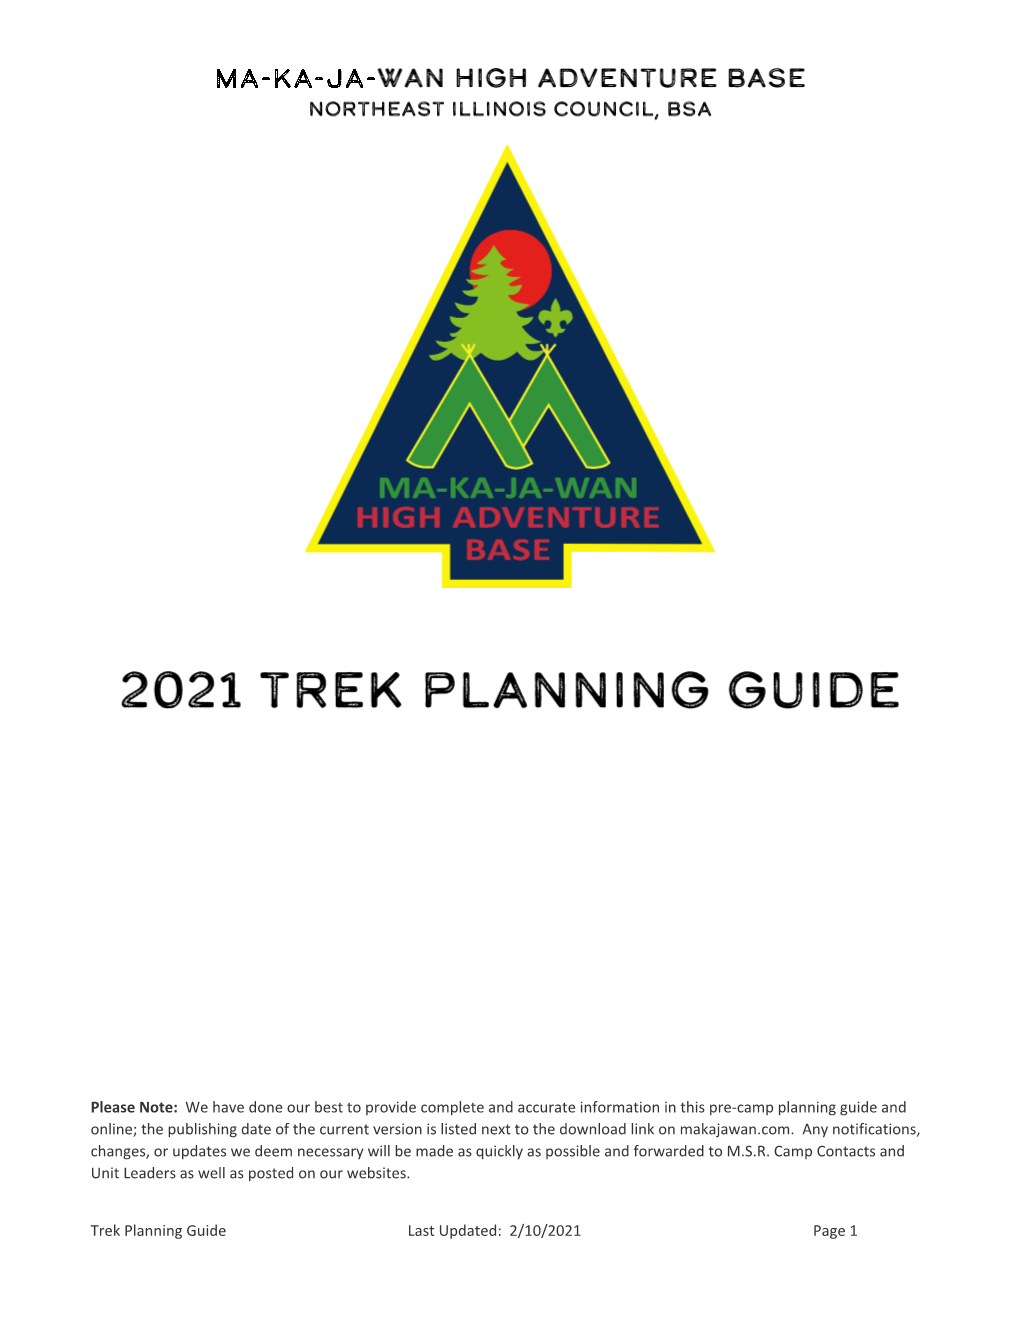 2021 MSR High Adventure Trek Guide